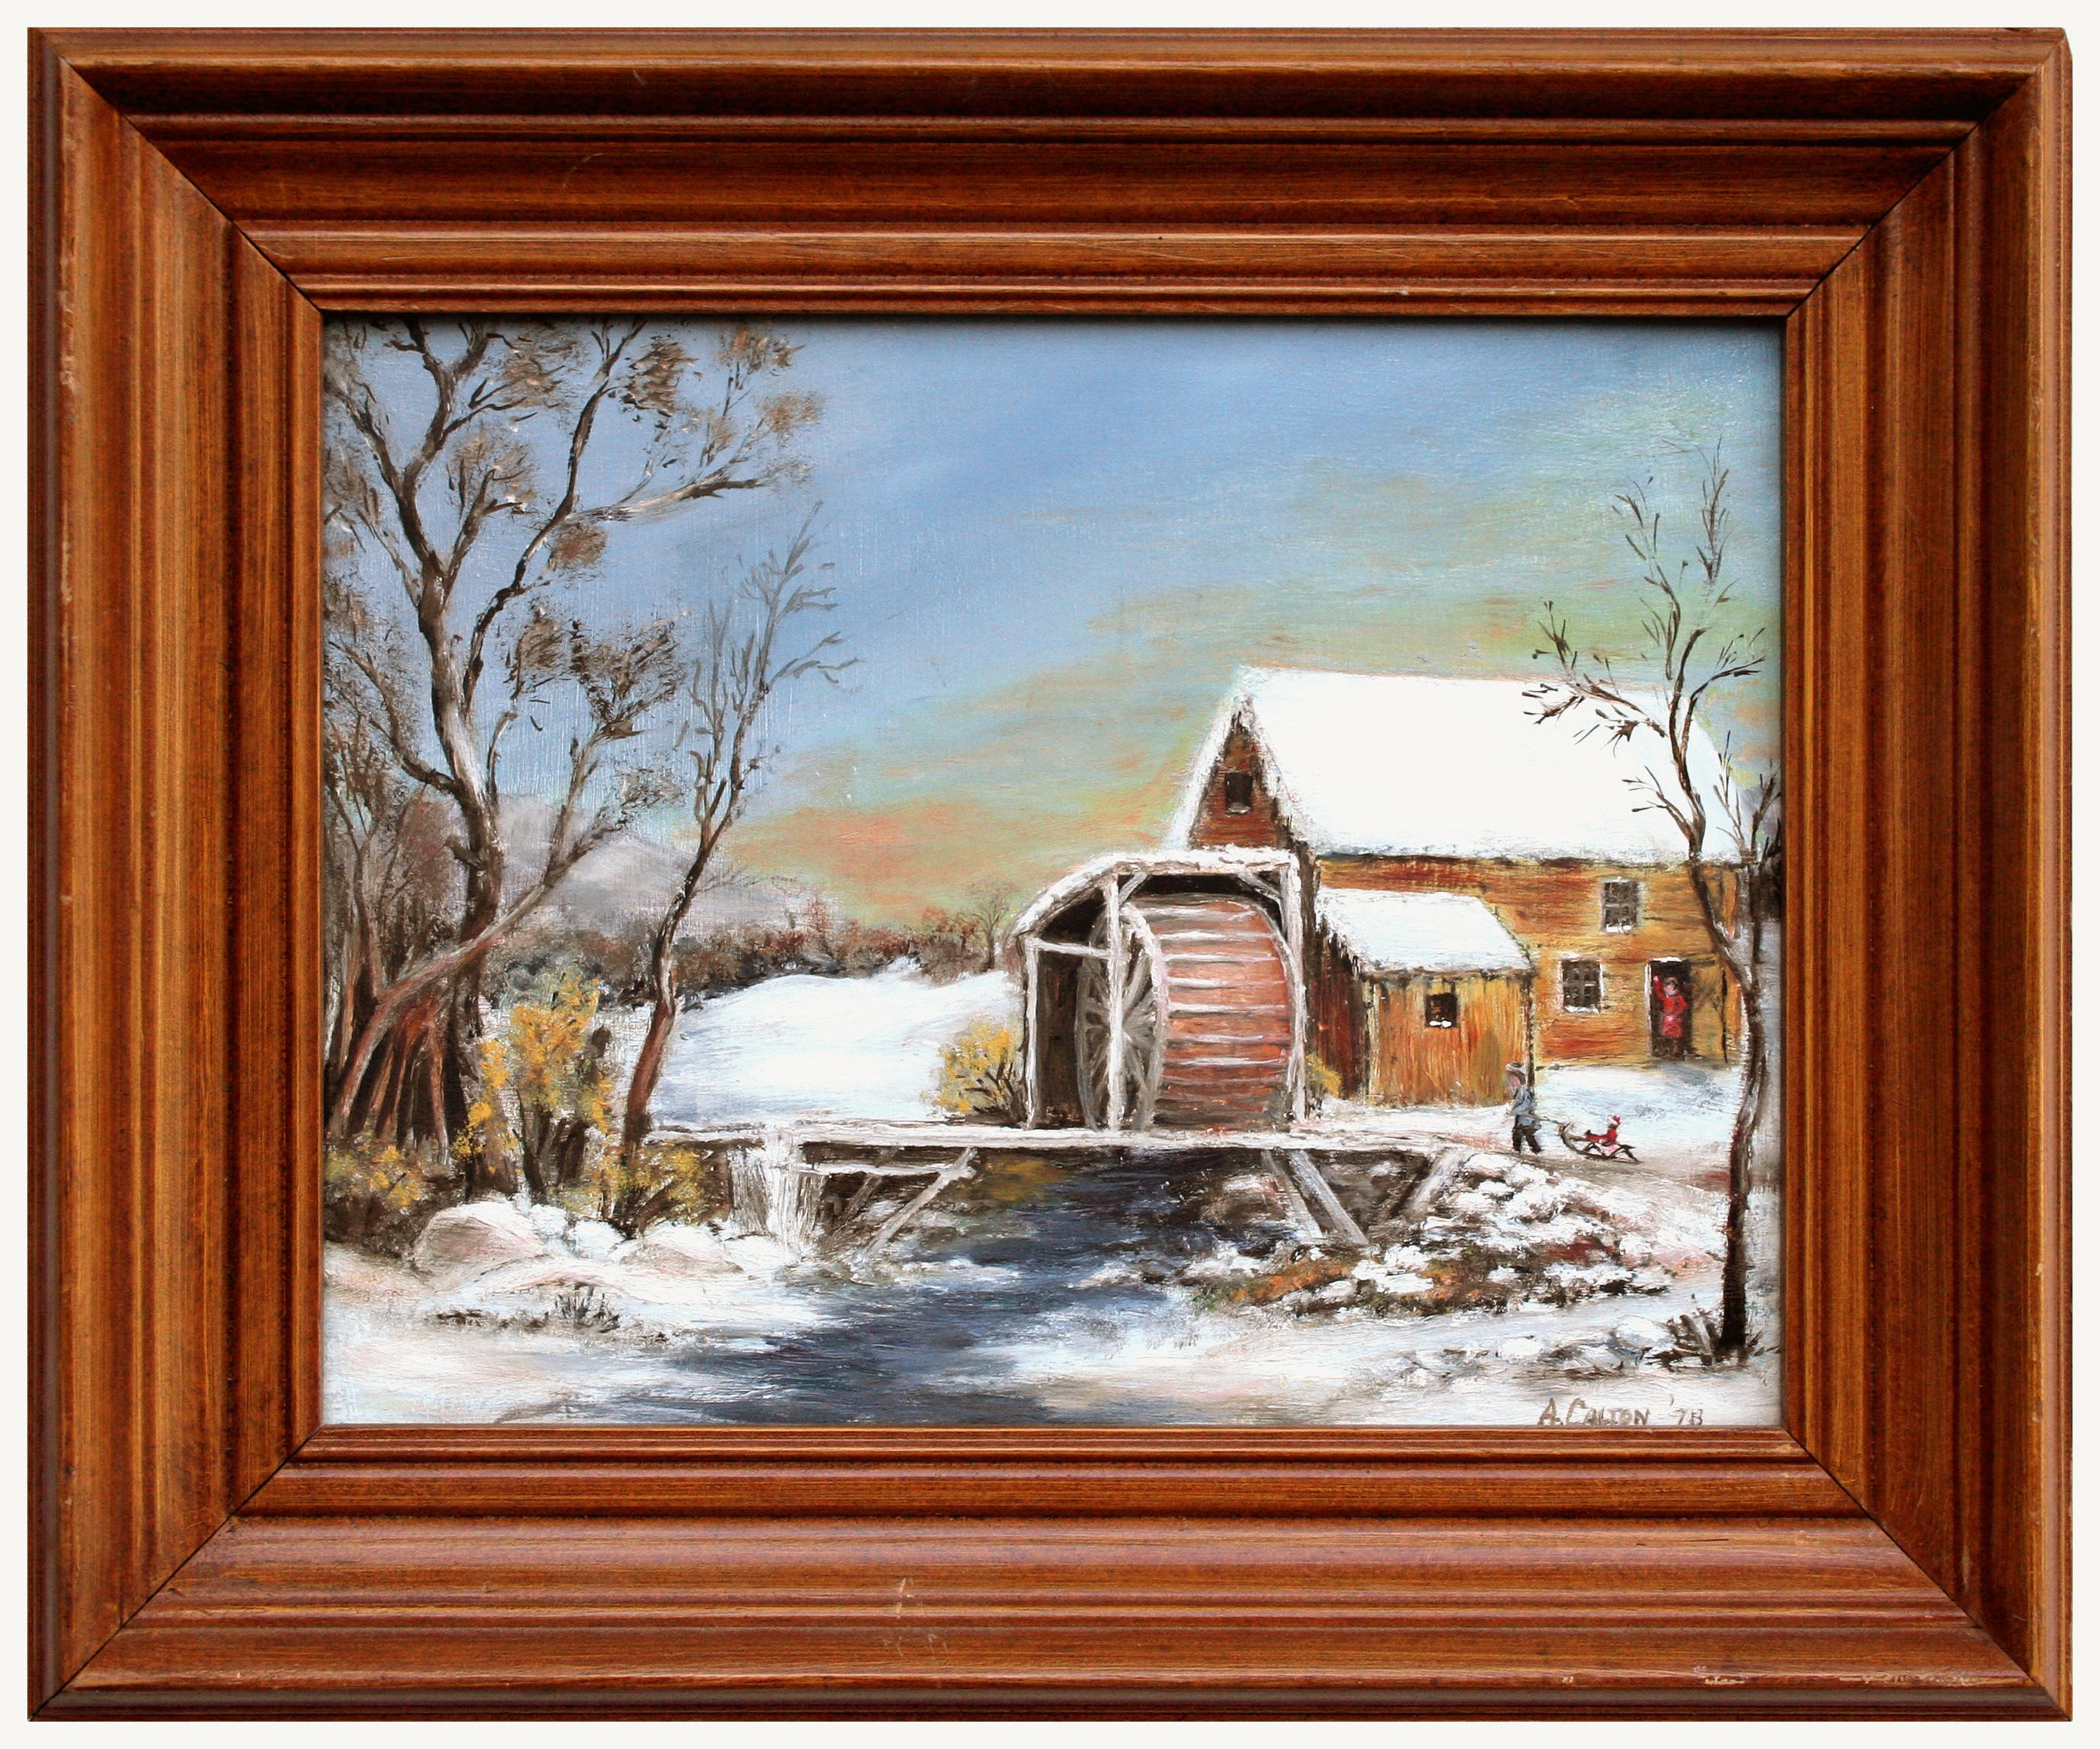 S. Carlton Figurative Painting - Snowy Watermill - Winter Landscape